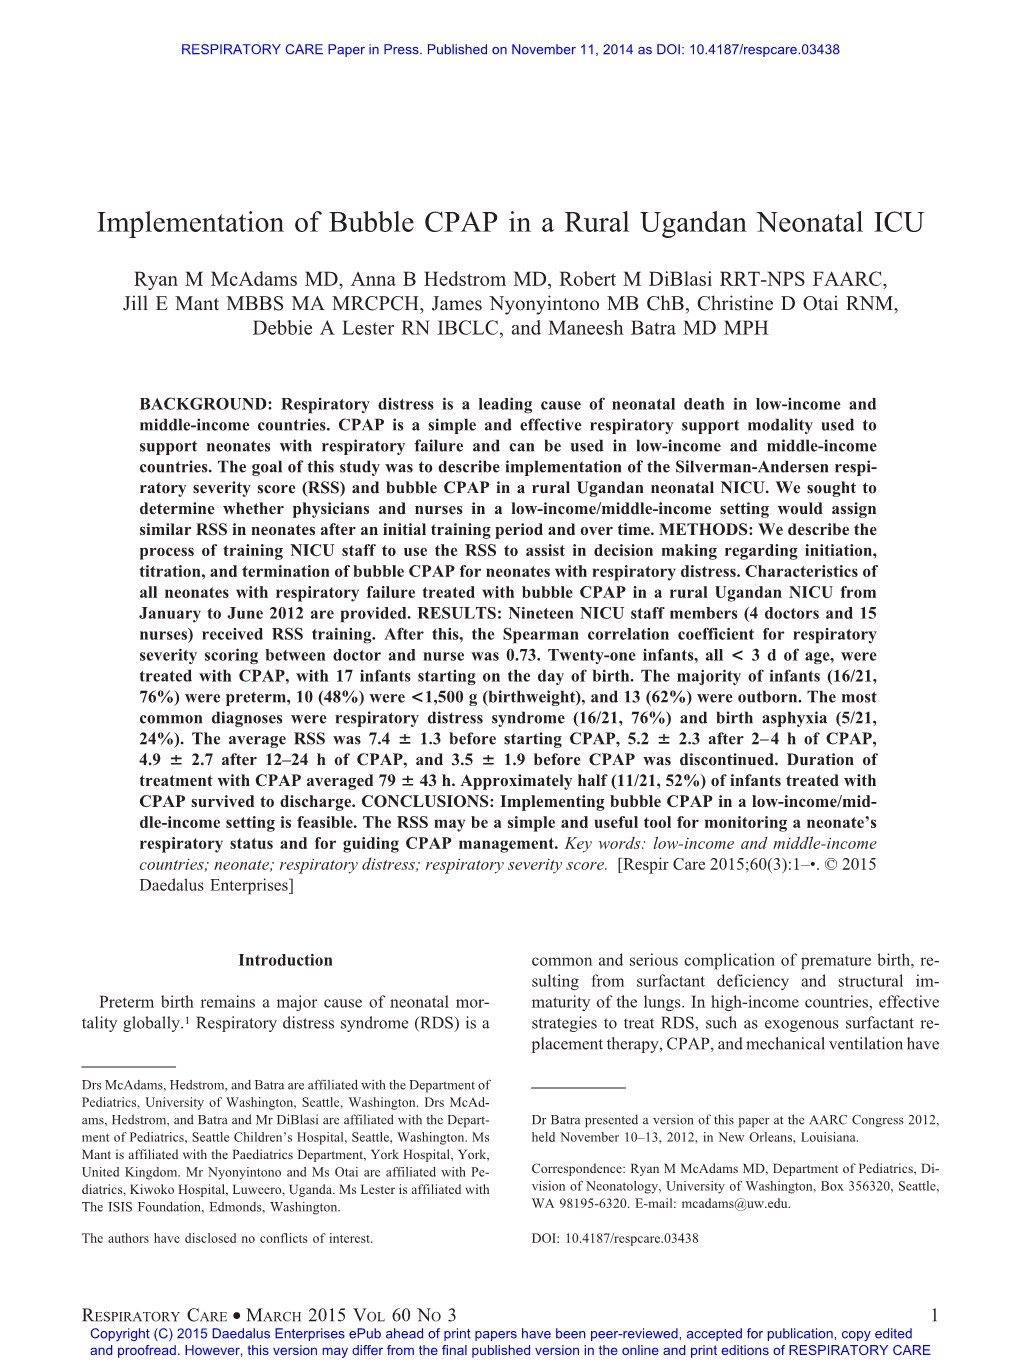 Implementation of Bubble CPAP in a Rural Ugandan Neonatal ICU